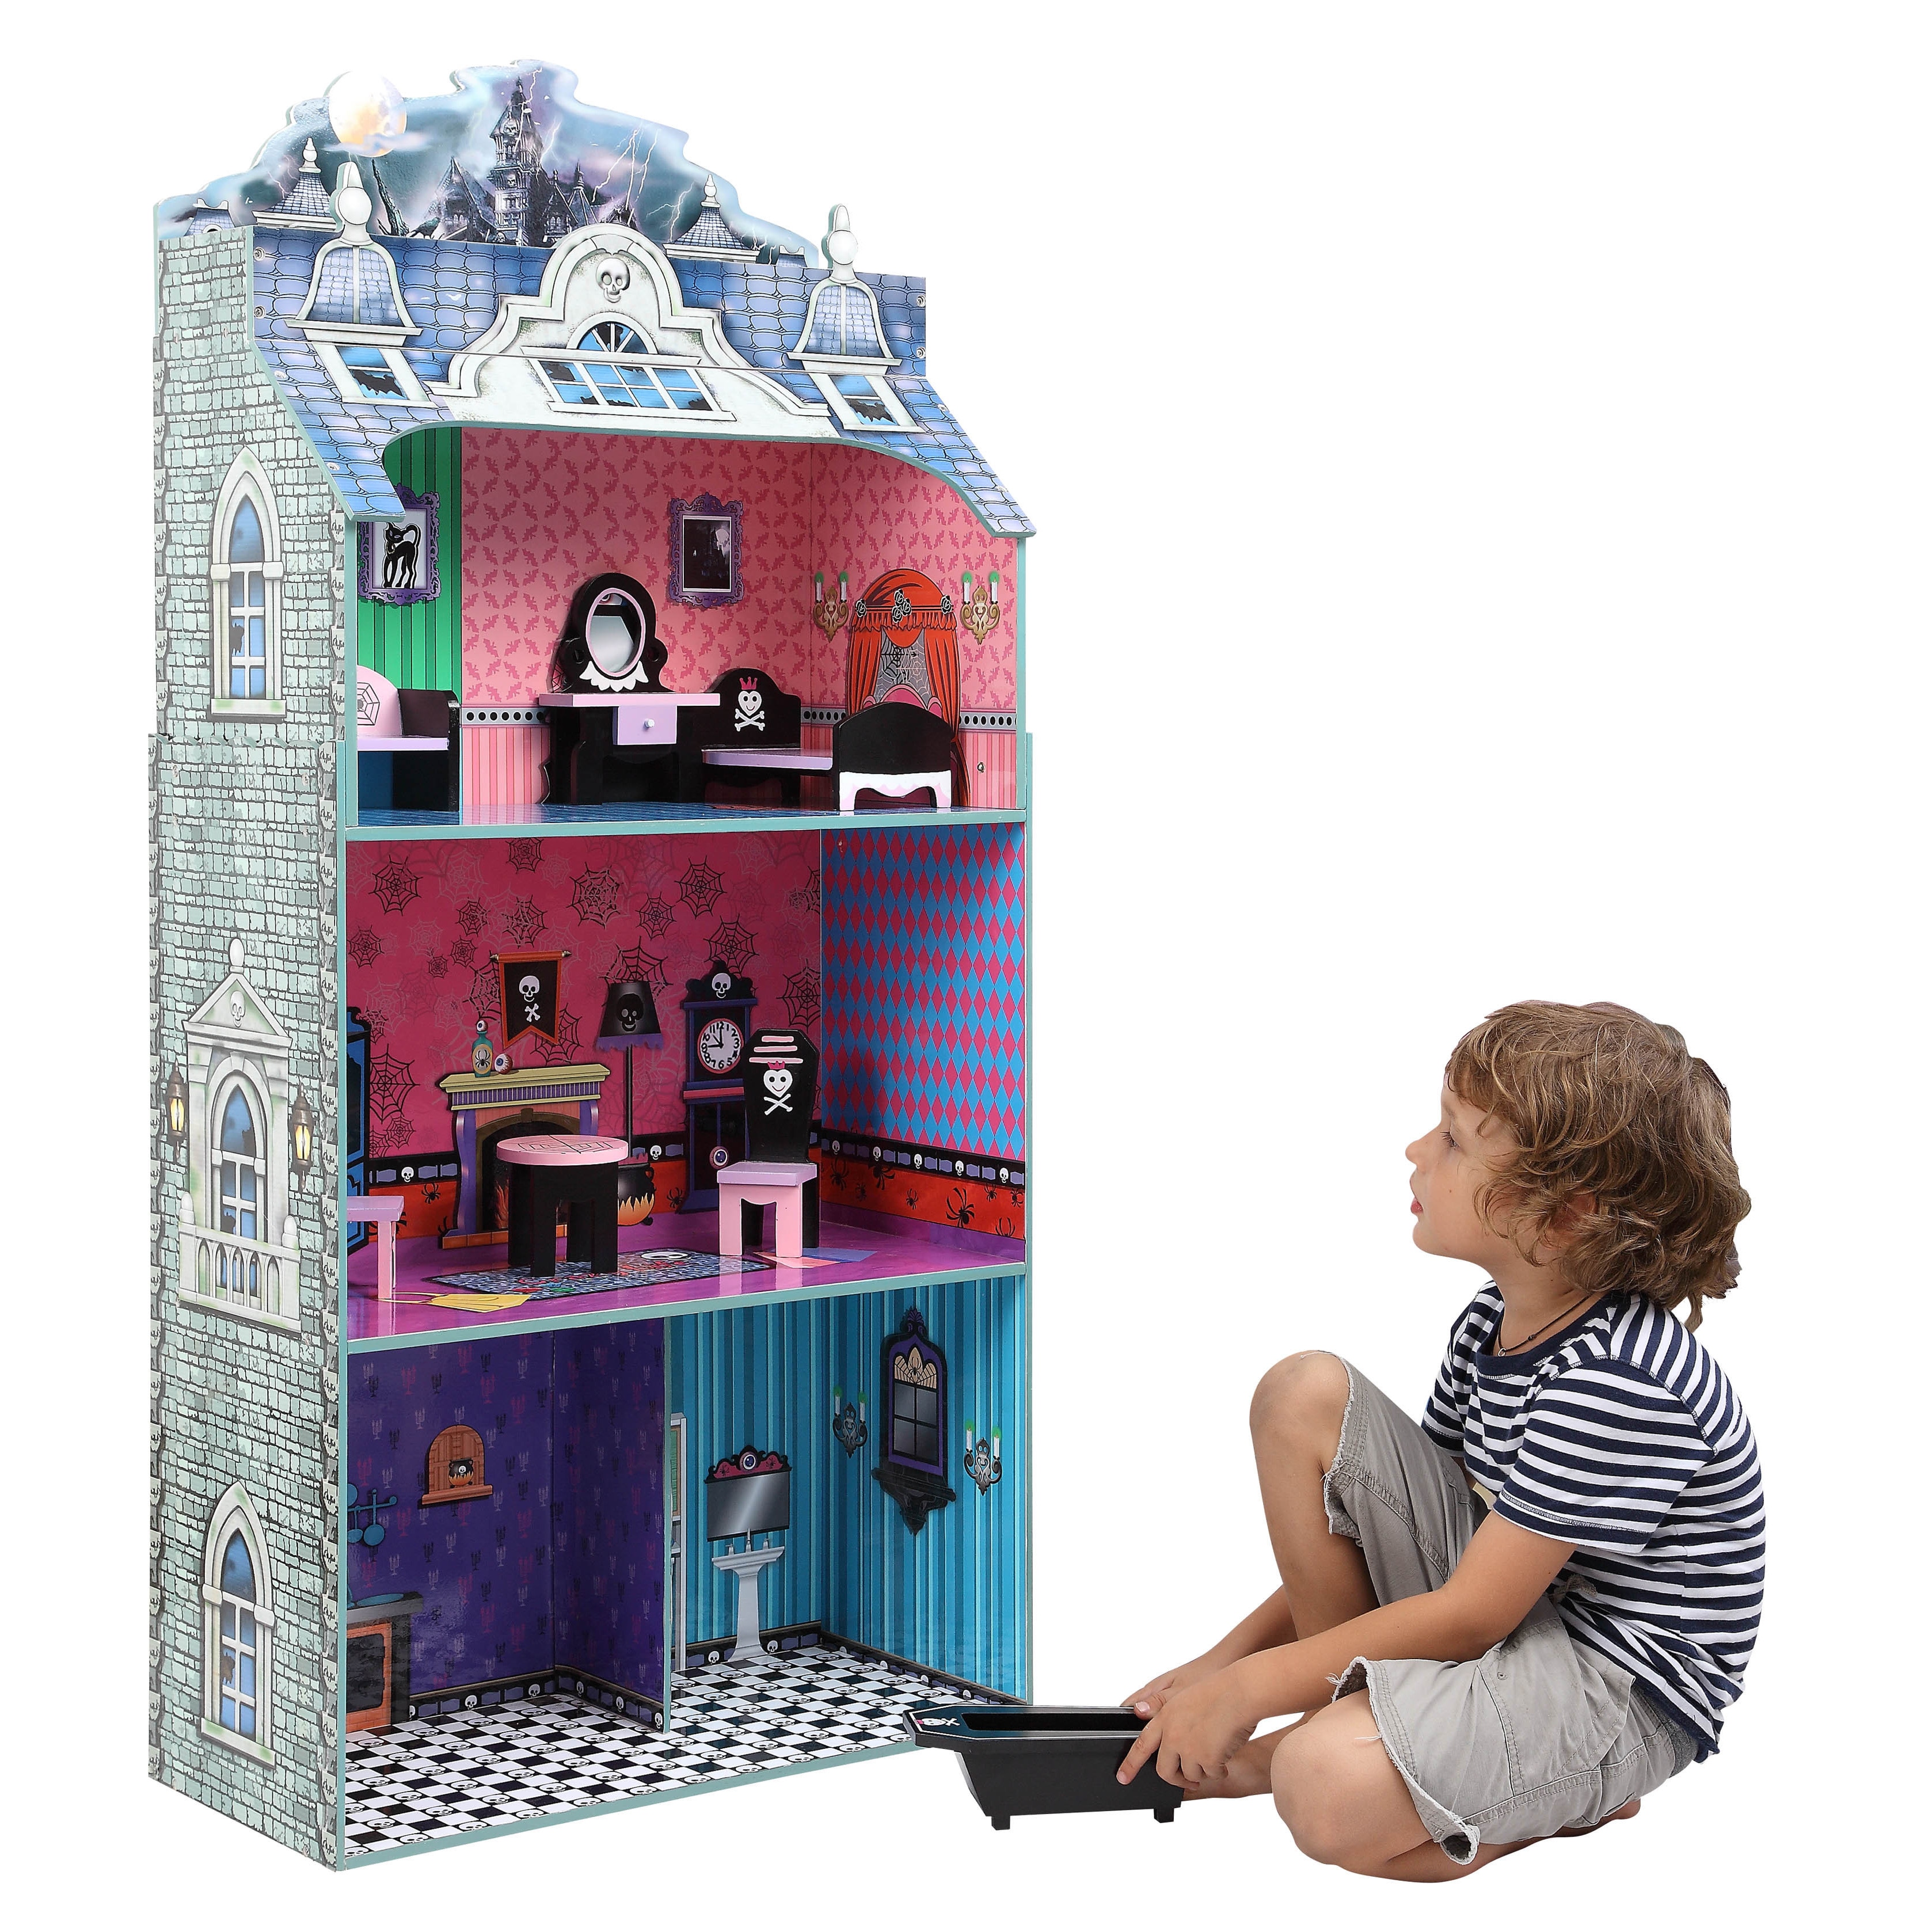 teamson dollhouse furniture